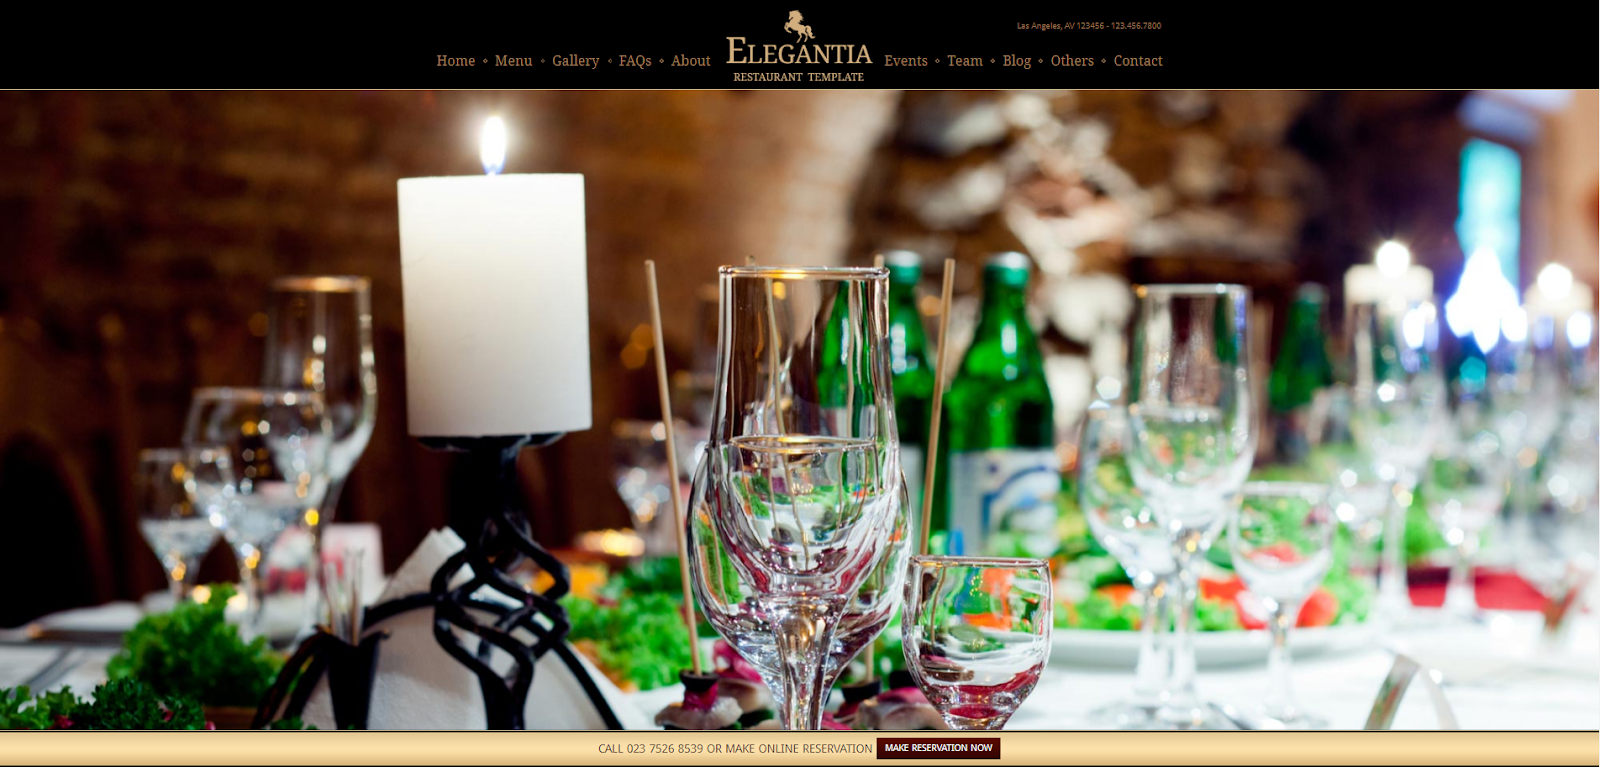 Elegantia - A WordPress Theme for Restaurant and Cafe